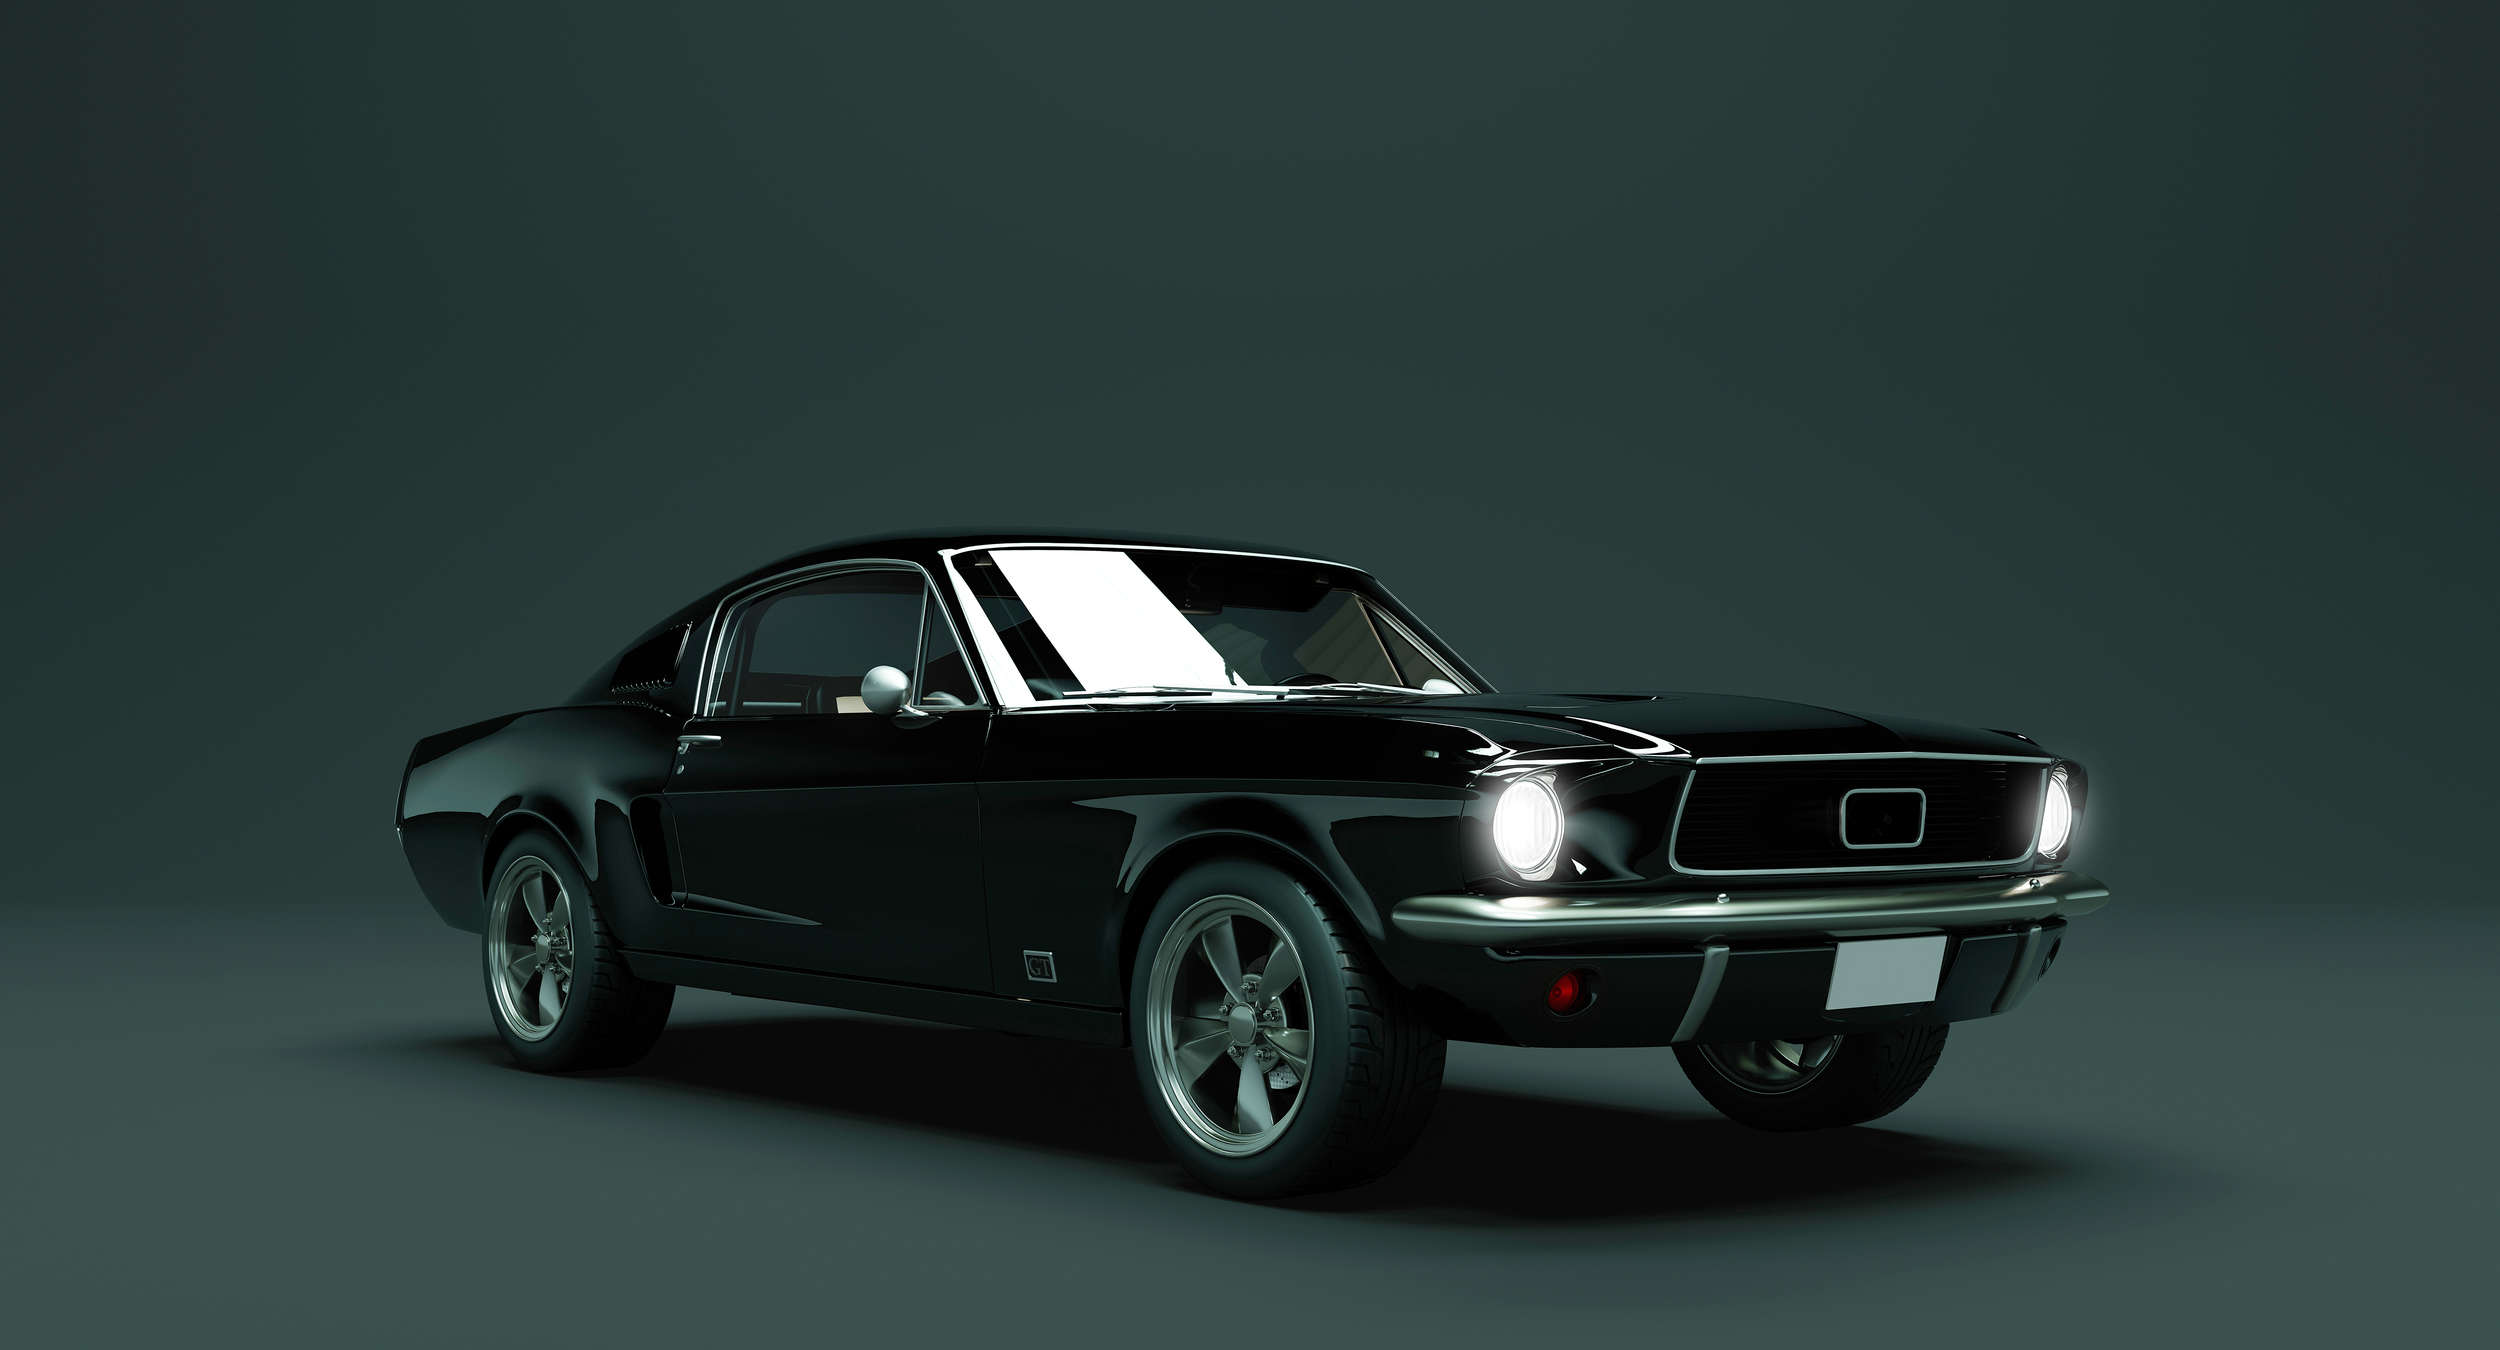             Mustang 2 - Fototapete, Mustang 1968 Vintage Car – Blau, Schwarz | Premium Glattvlies
        